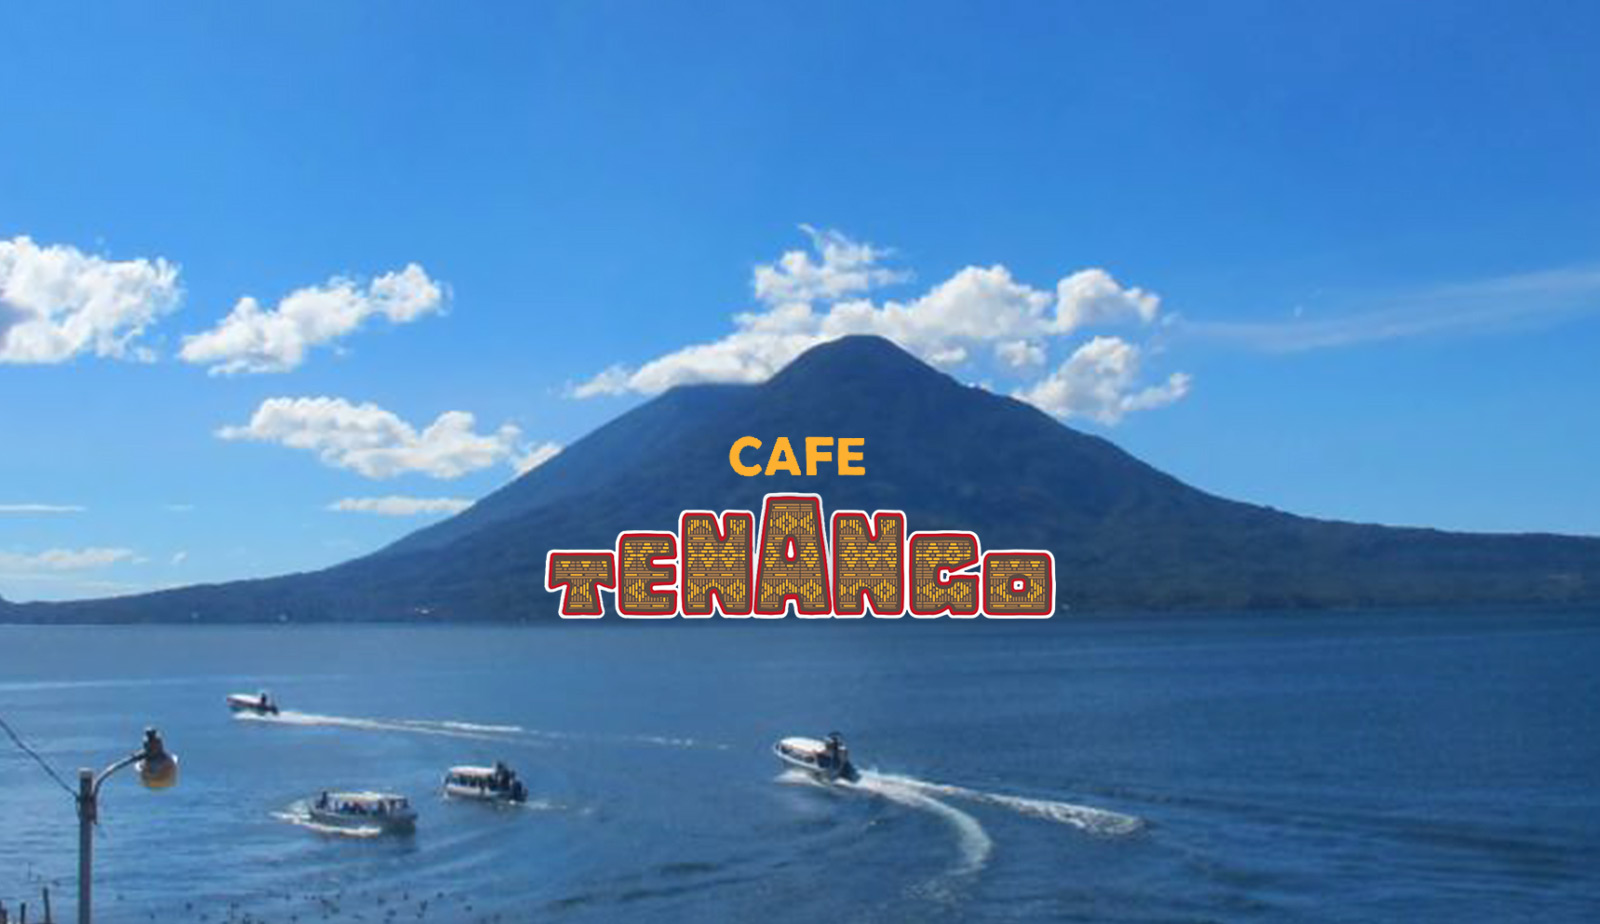 Lago de Atitlan mit Logo Cafe Tenango